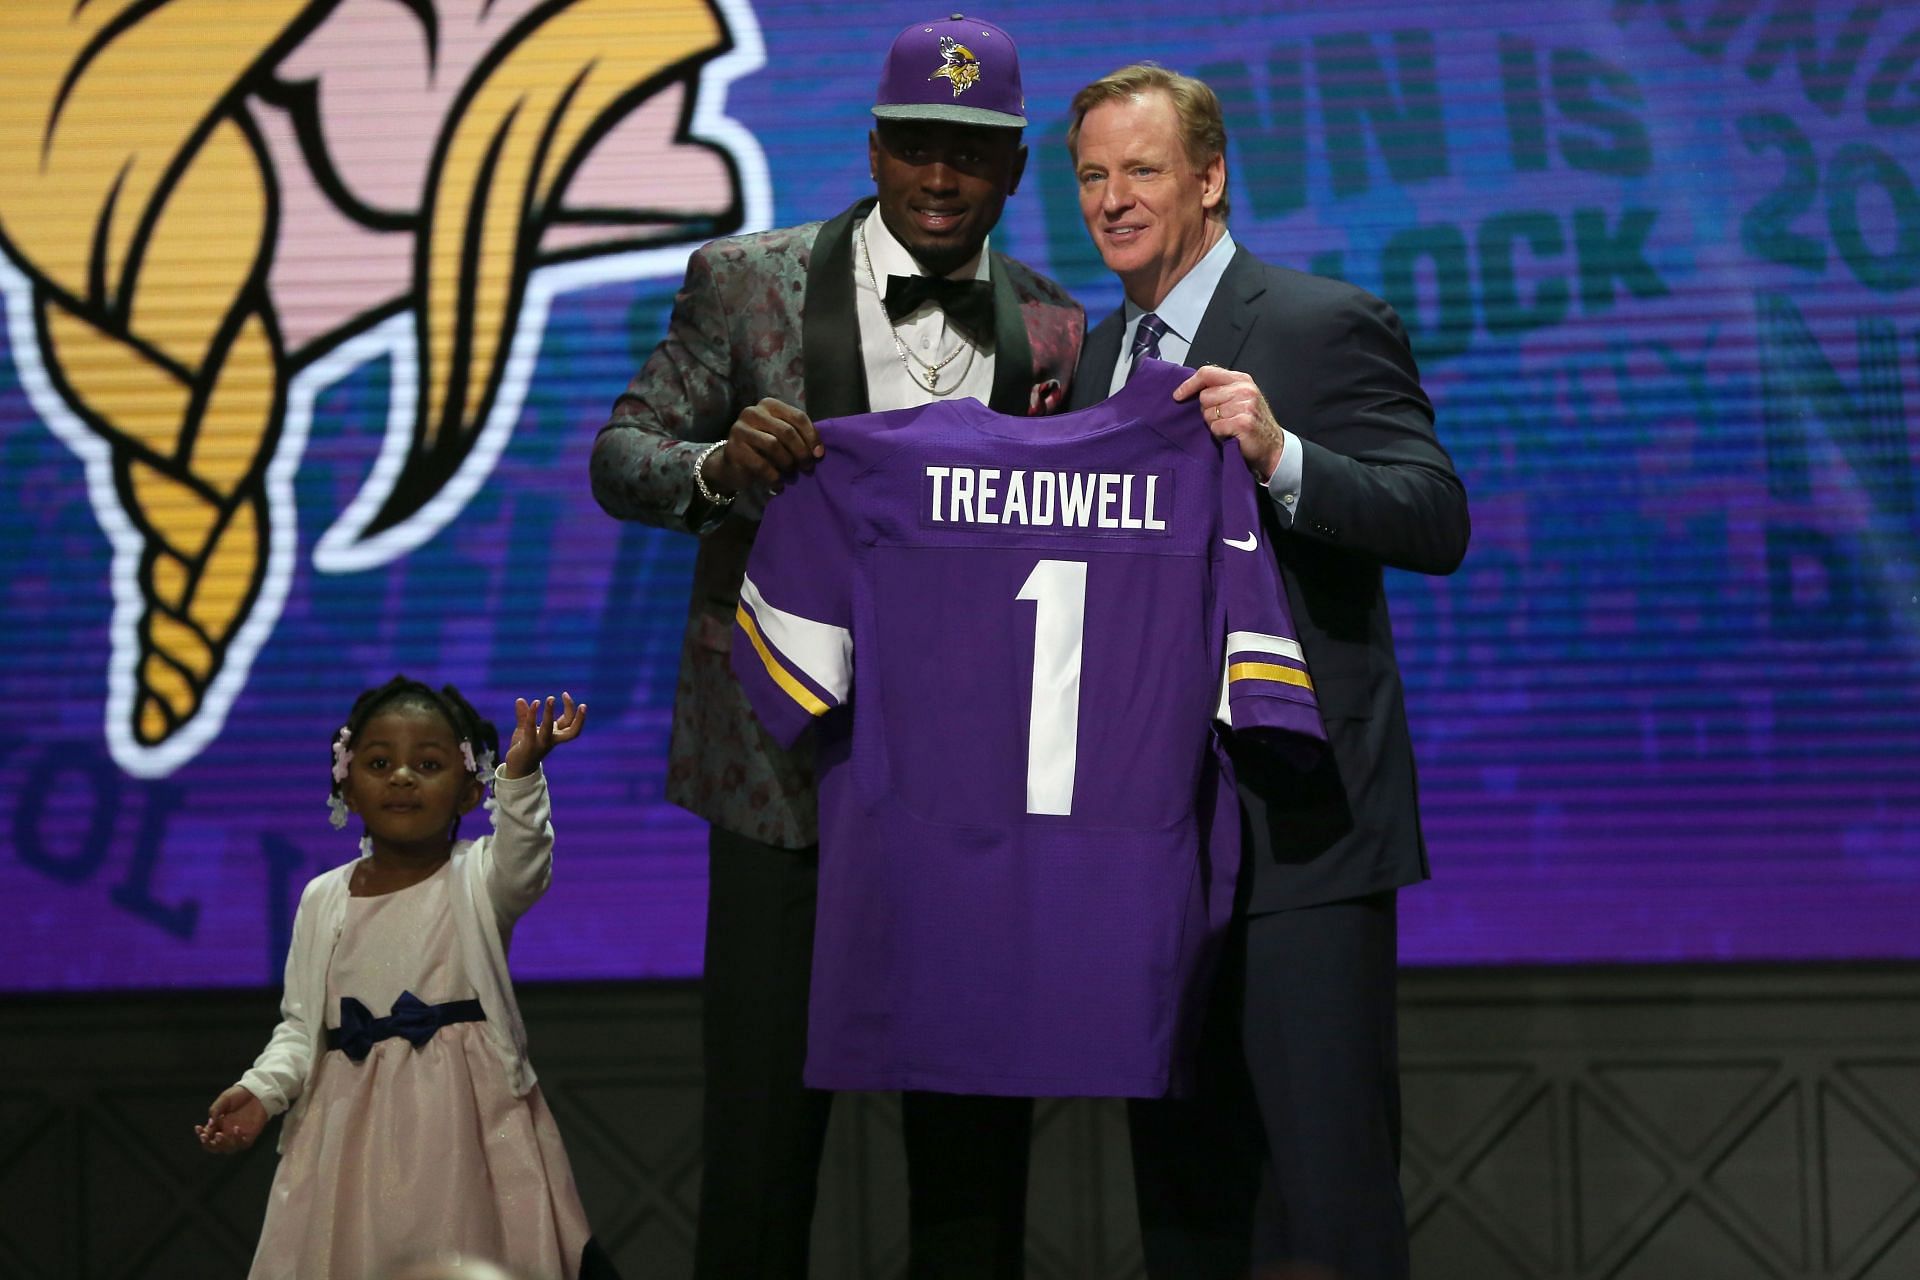 Laquon Treadwell at the 2016 NFL Draft